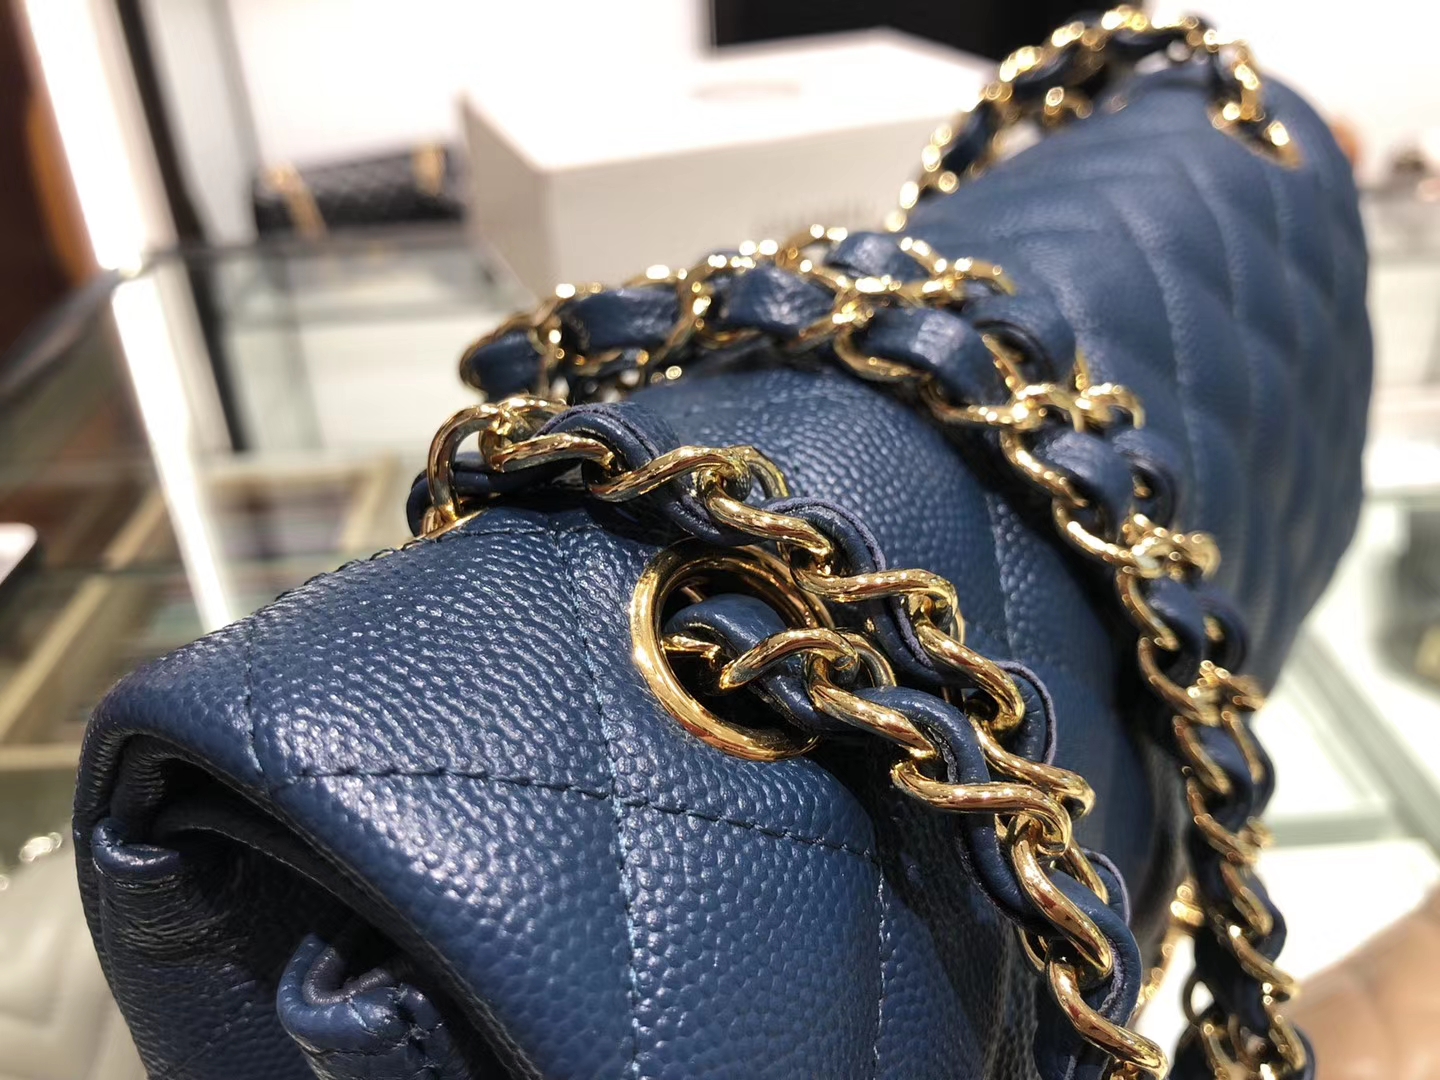 Chanel（香奈儿）cf # 链条包 藏蓝 细球纹 金扣 金链 25cm